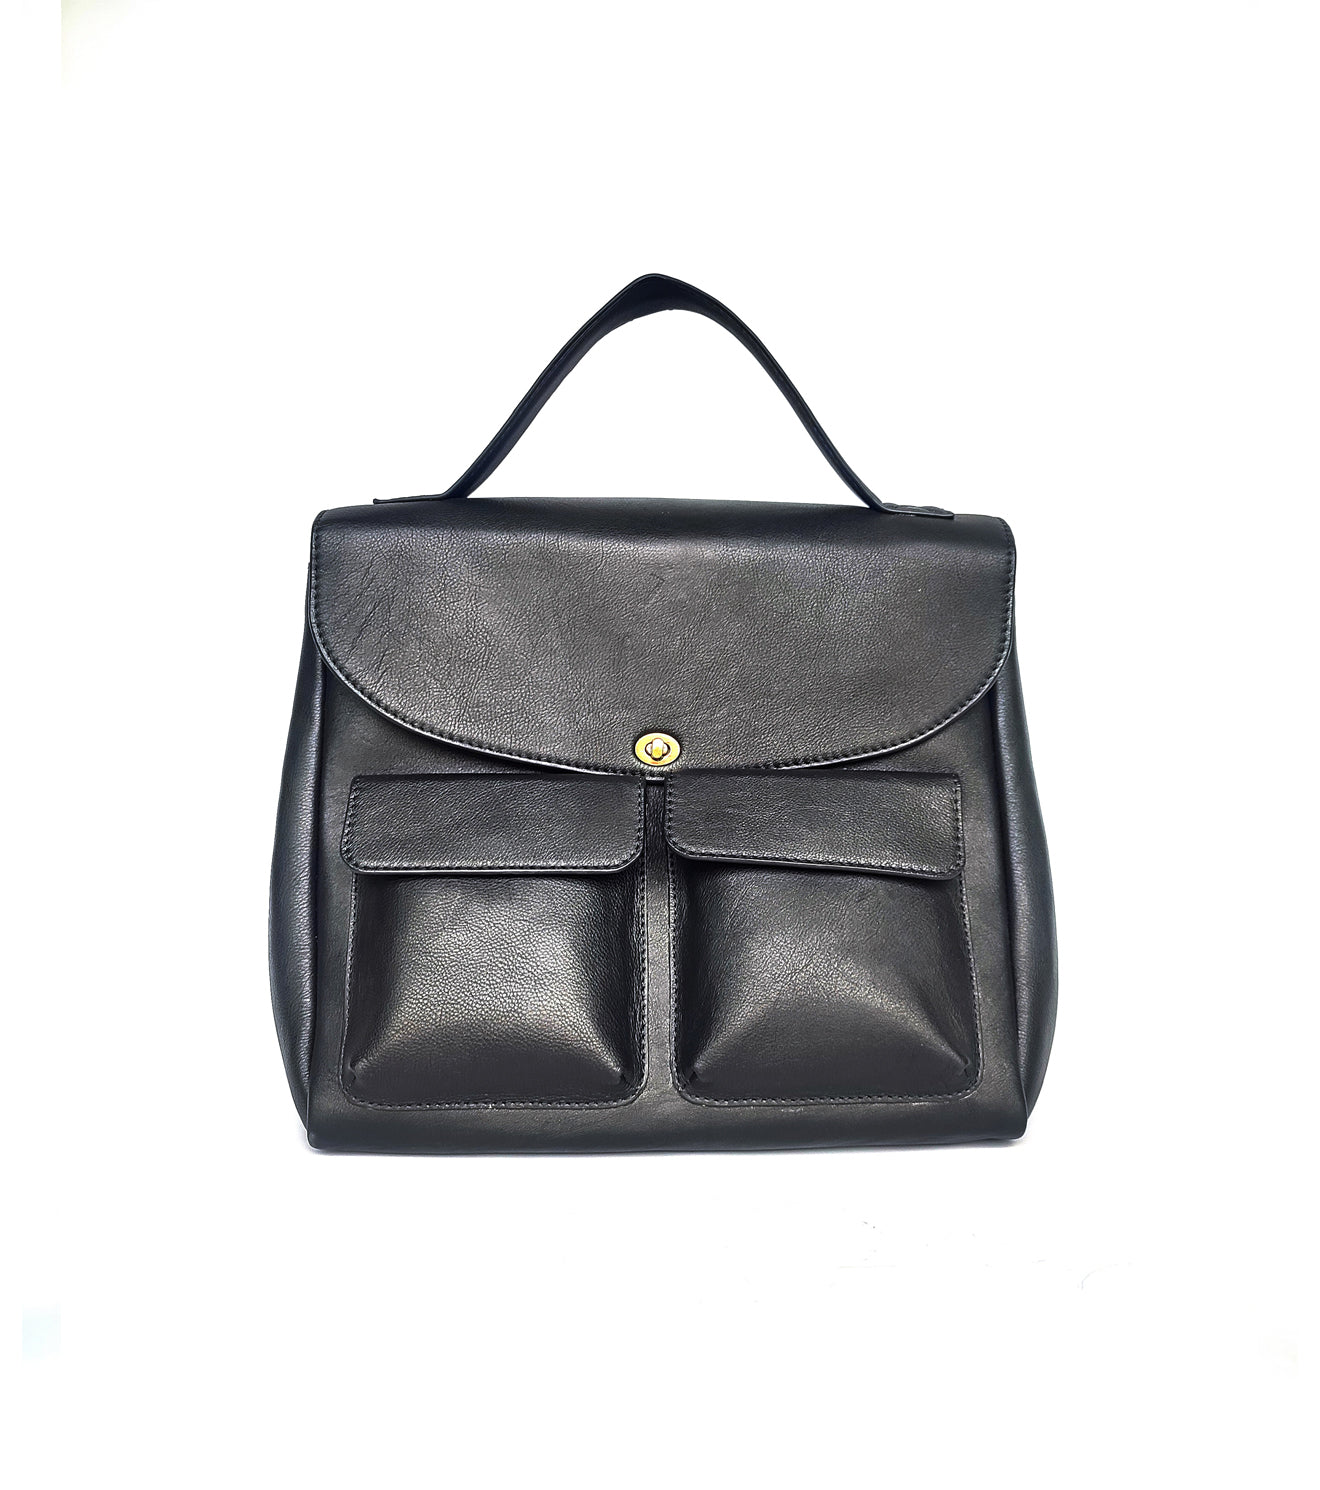 Colossal briefcase black